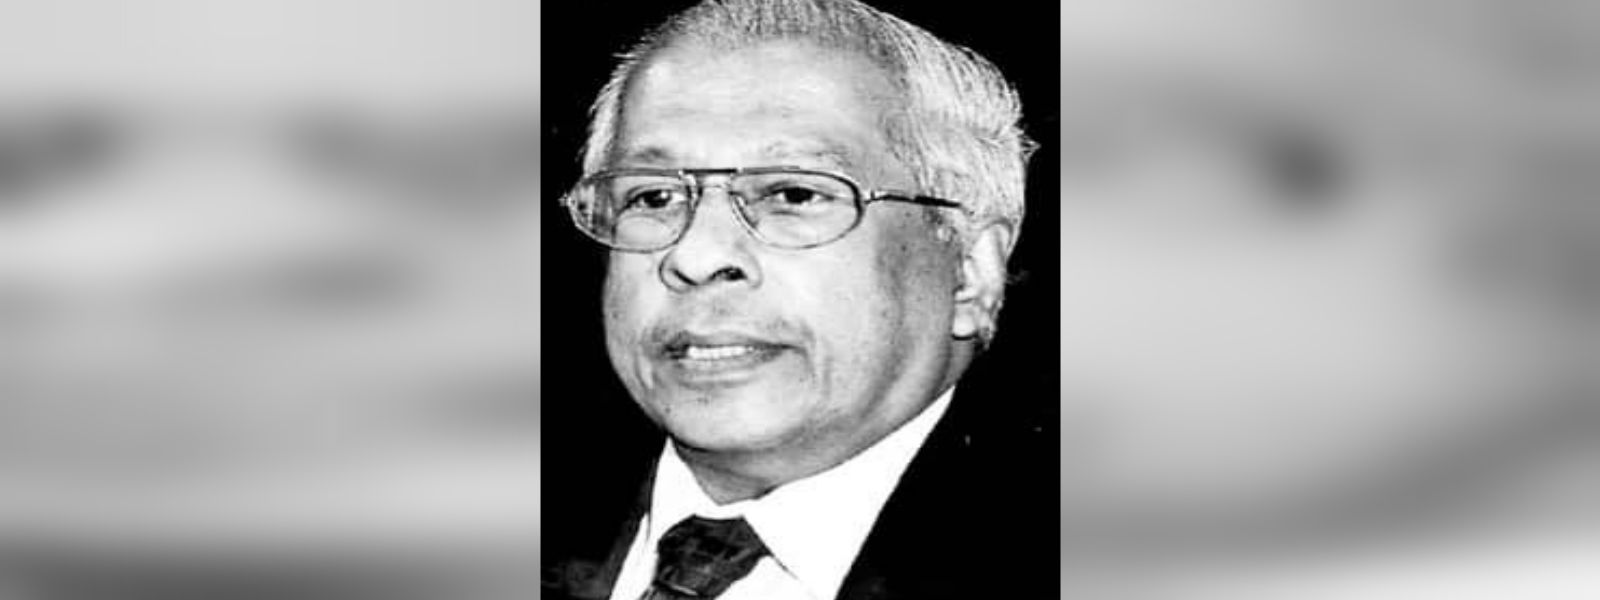 Former Minister Batty Weerakoon passes away